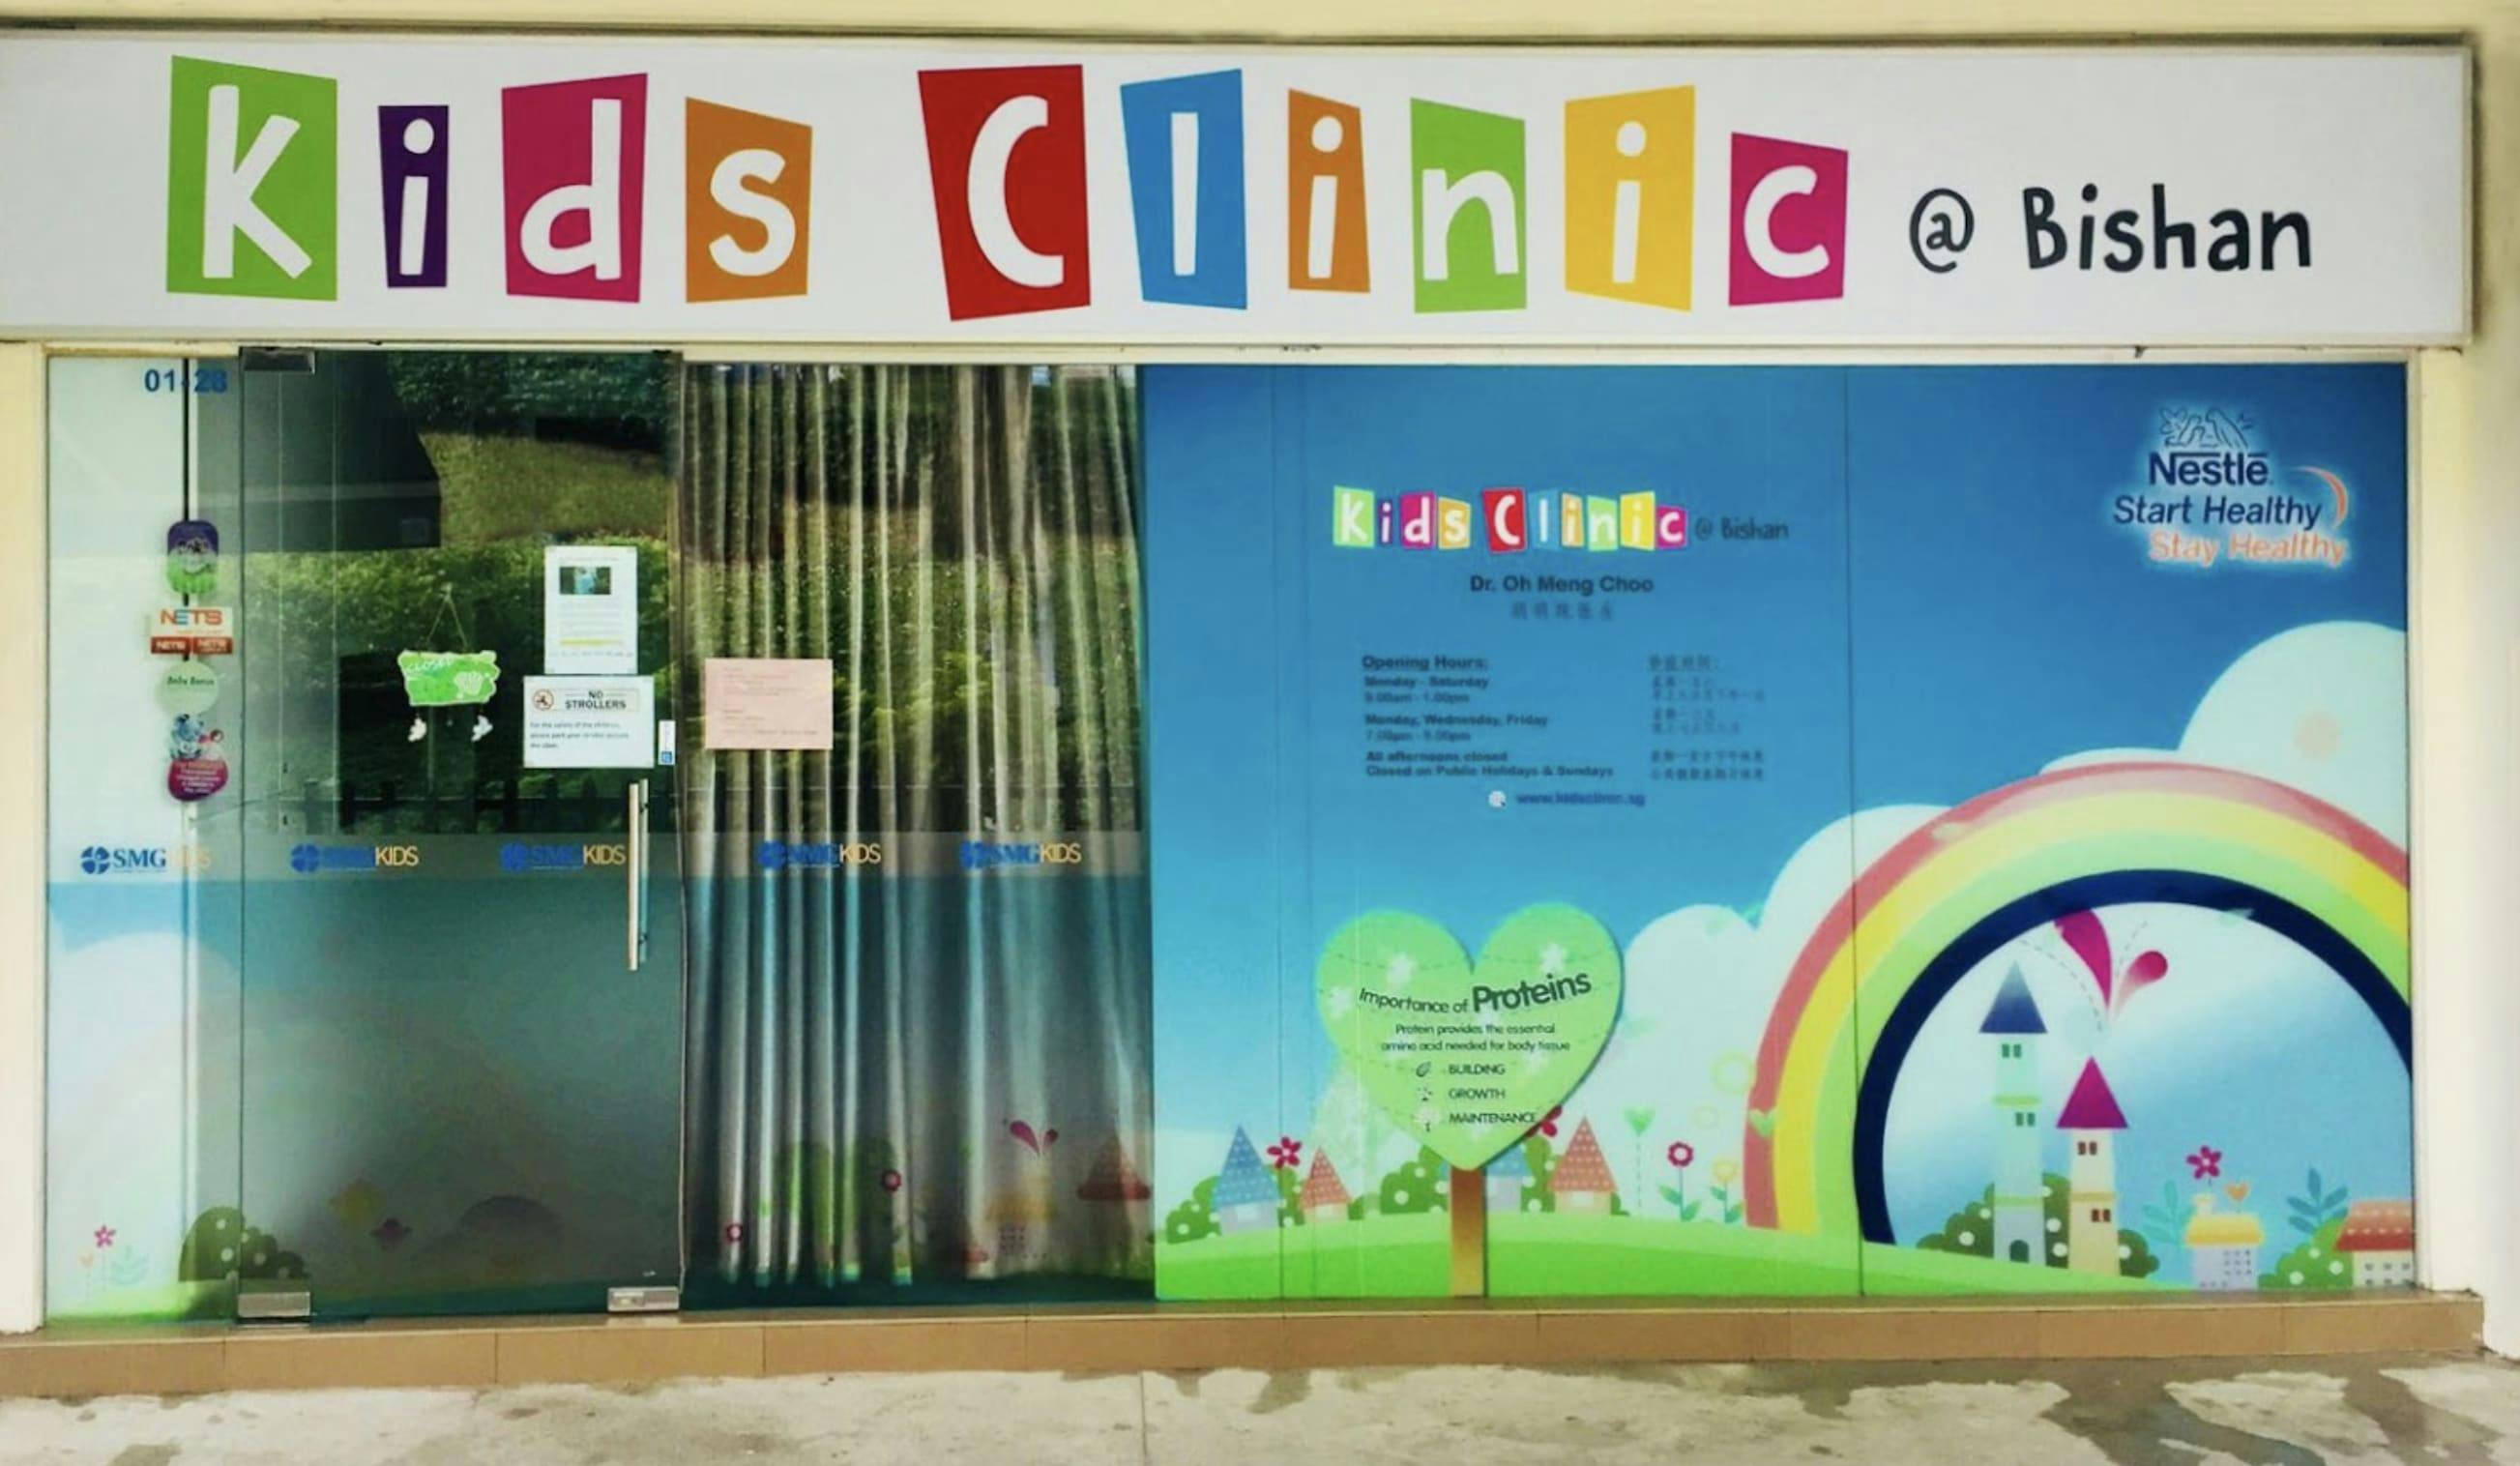 Kids Clinic @ Bishan by SMG